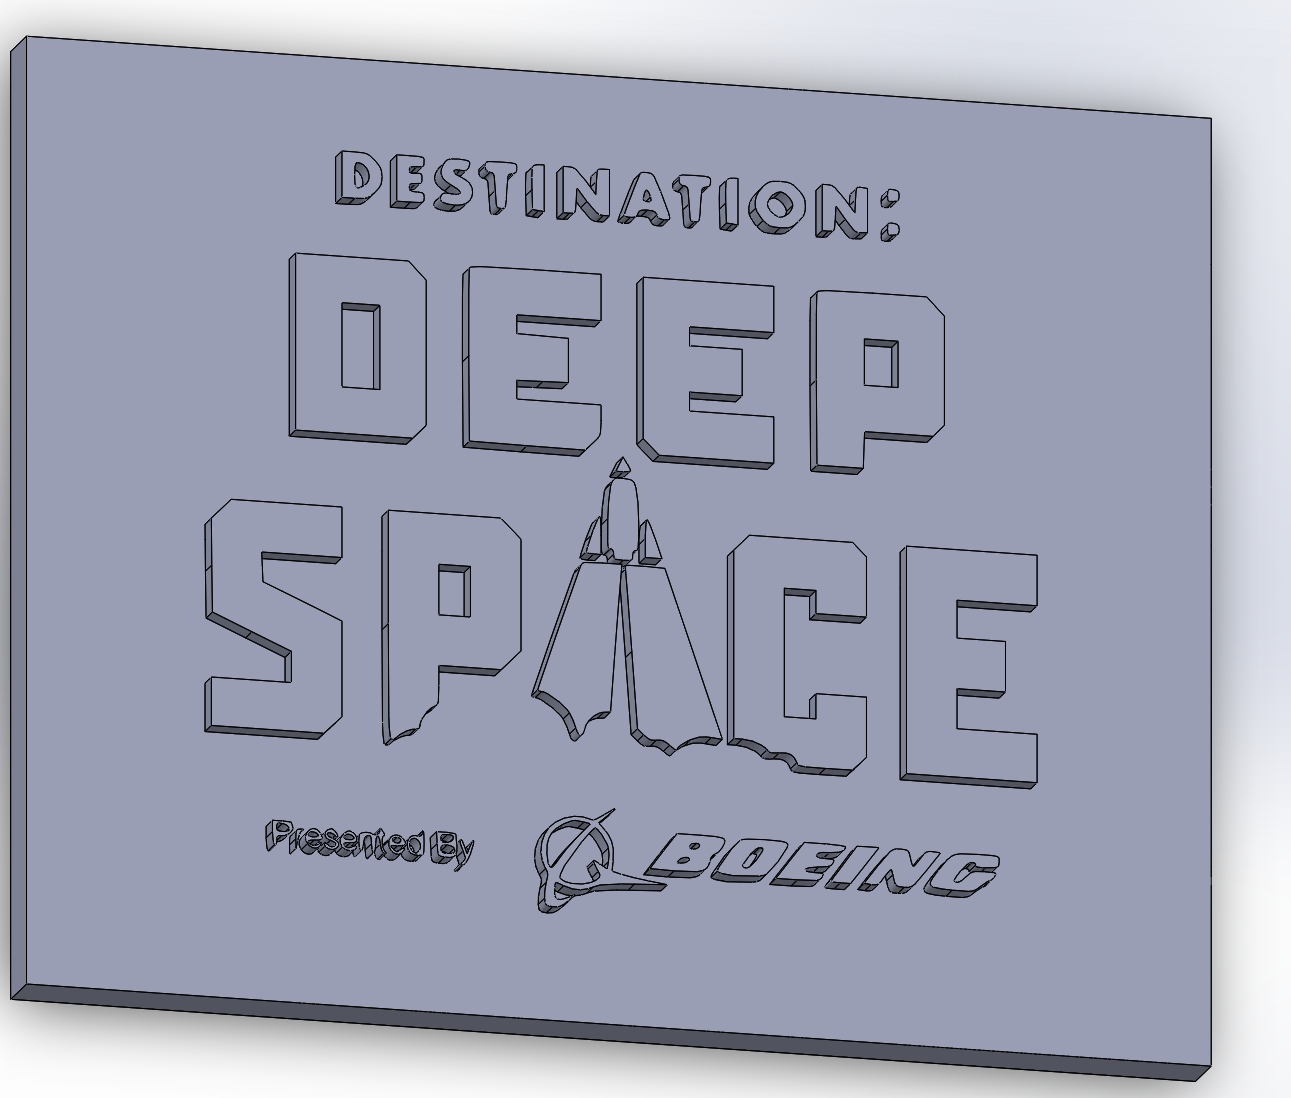 FIRST Robotics Competition Destination: Deep Space Logo